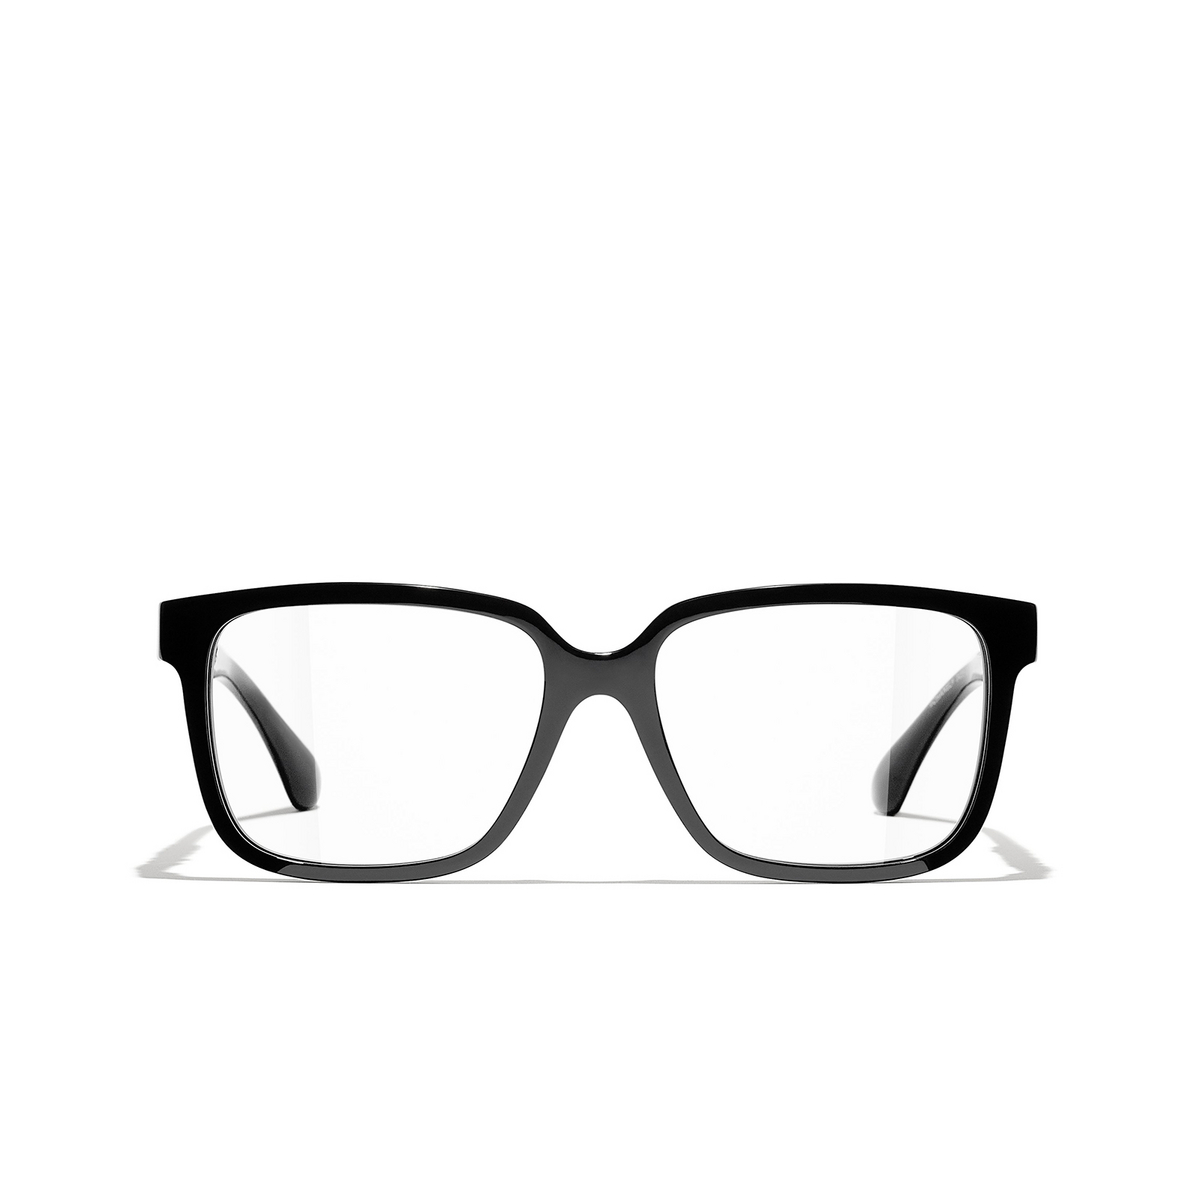 CHANEL square Eyeglasses C622 Black - front view